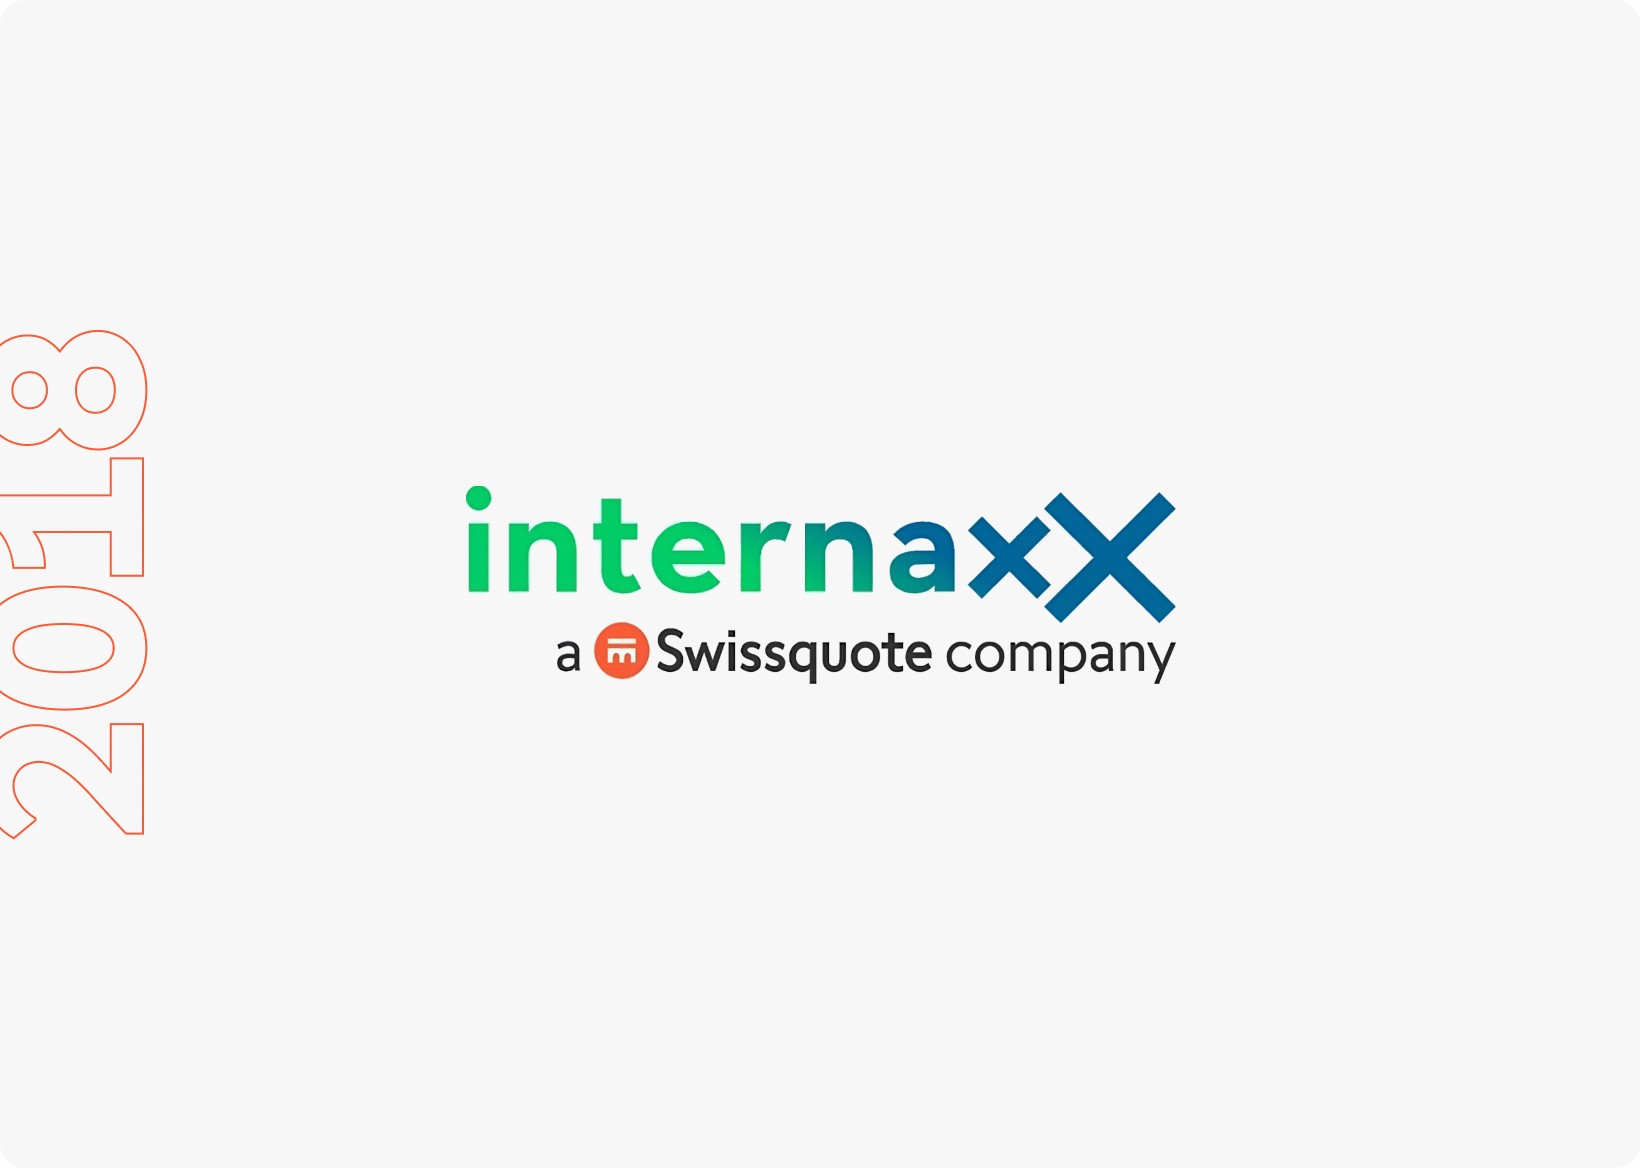 Internaxx and Swissquote logo